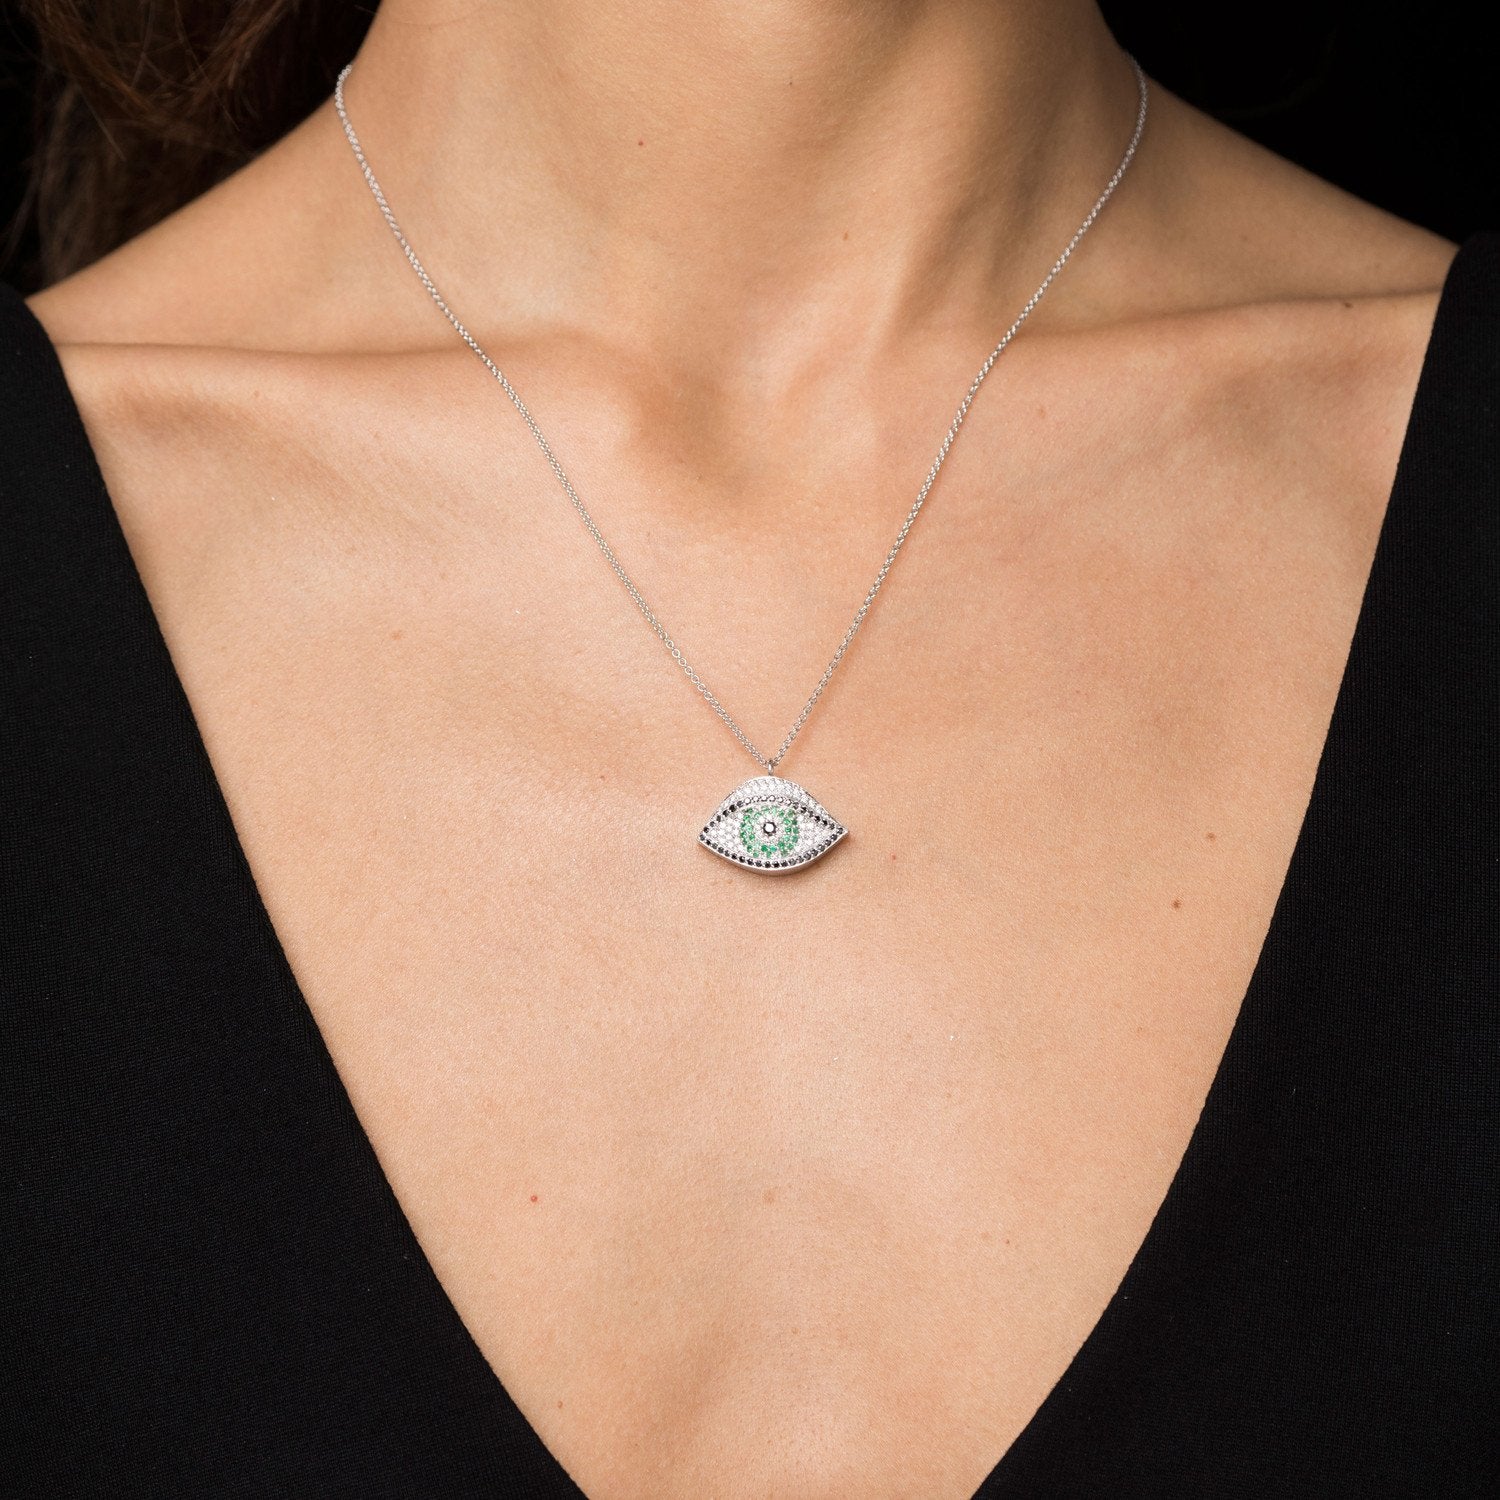 Evil Eye Pendant Necklace w/ Diamonds and Precious Gemstones